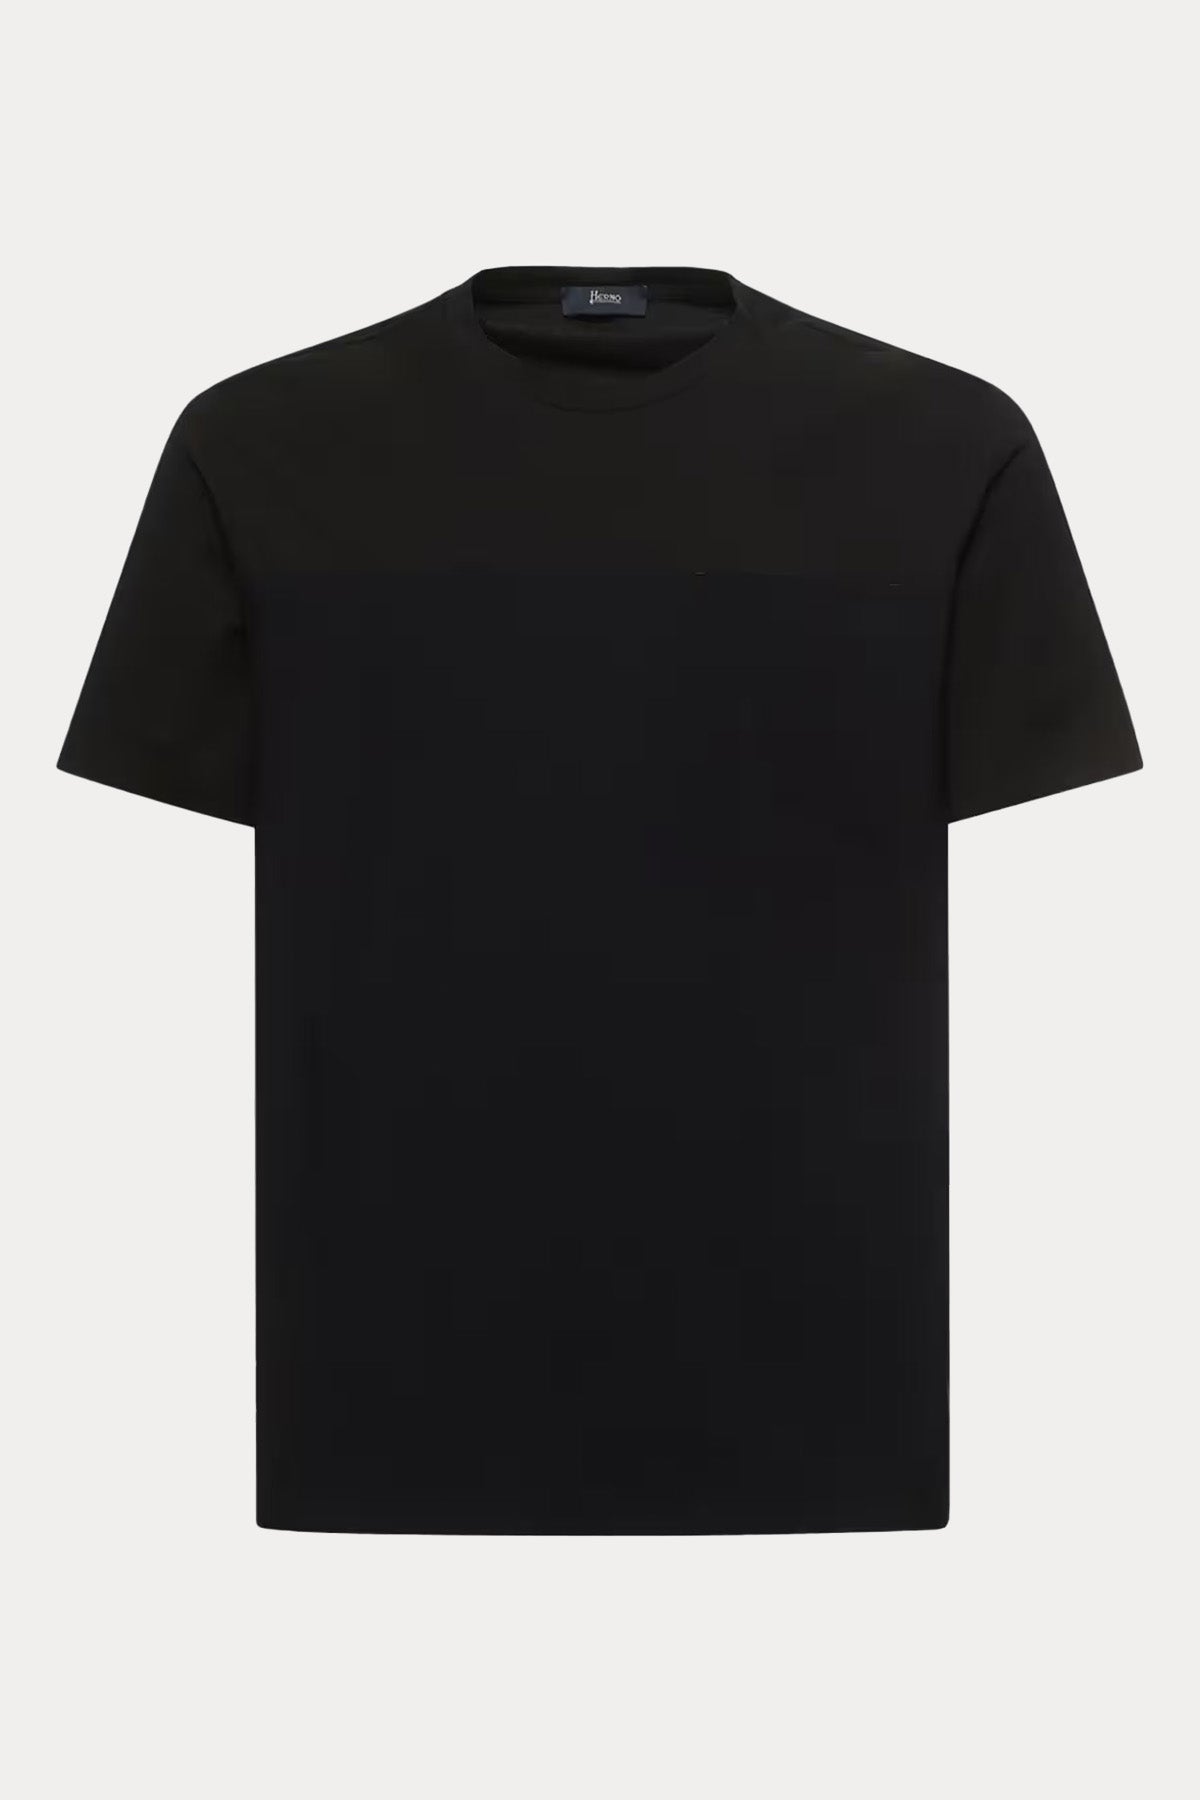 Herno Cep Detaylı Yuvarlak Yaka Streç T-shirt-Libas Trendy Fashion Store